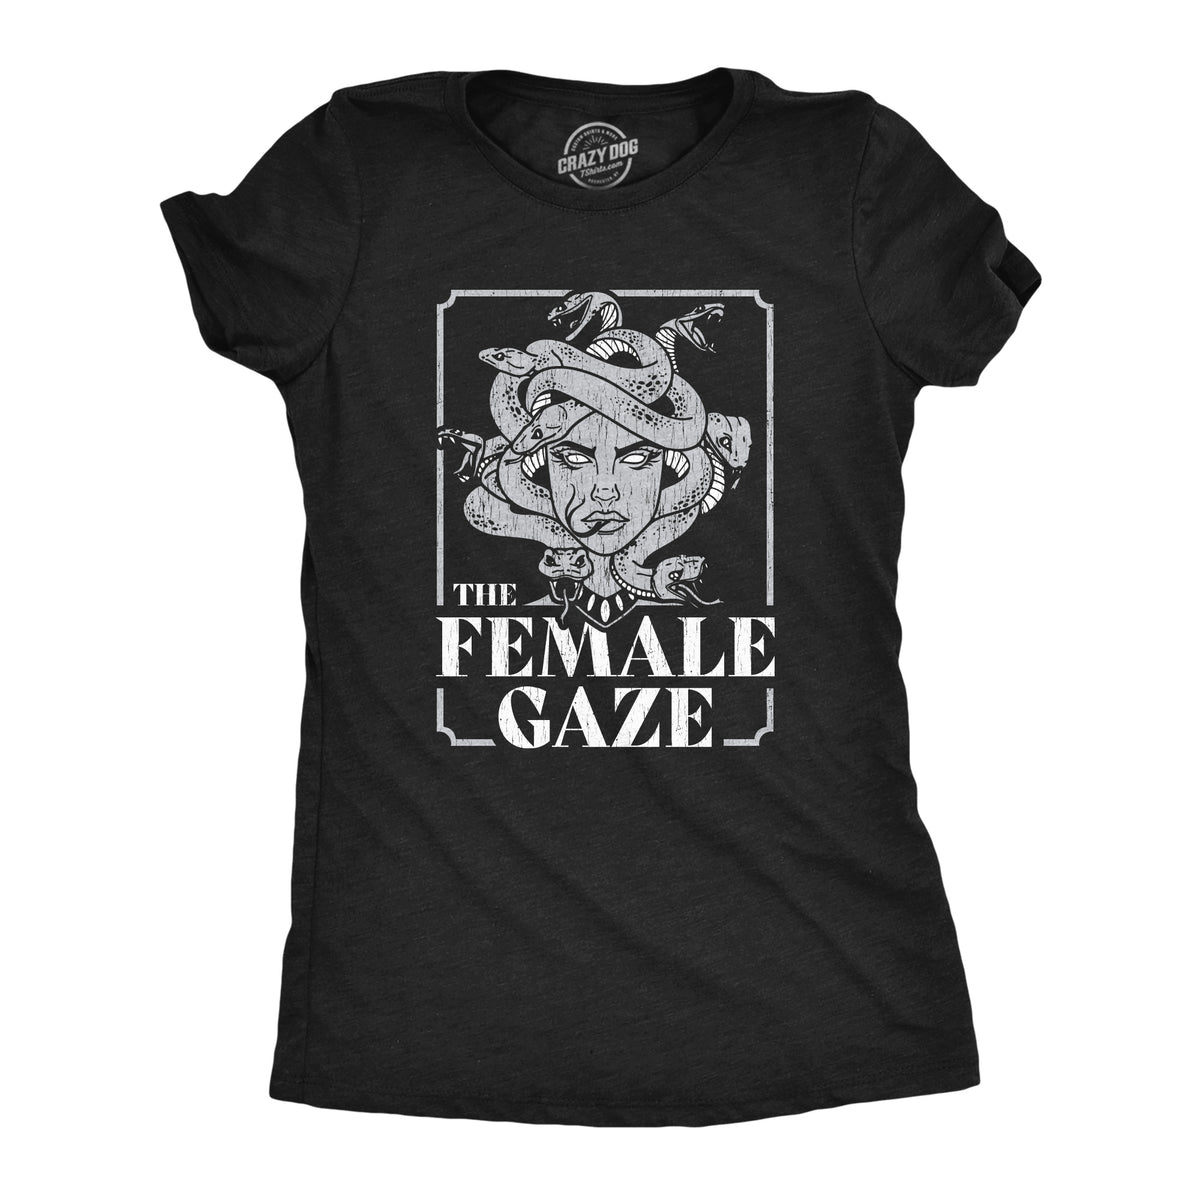 Funny Heather Black - GAZE The Female Gaze Womens T Shirt Nerdy Sarcastic Tee